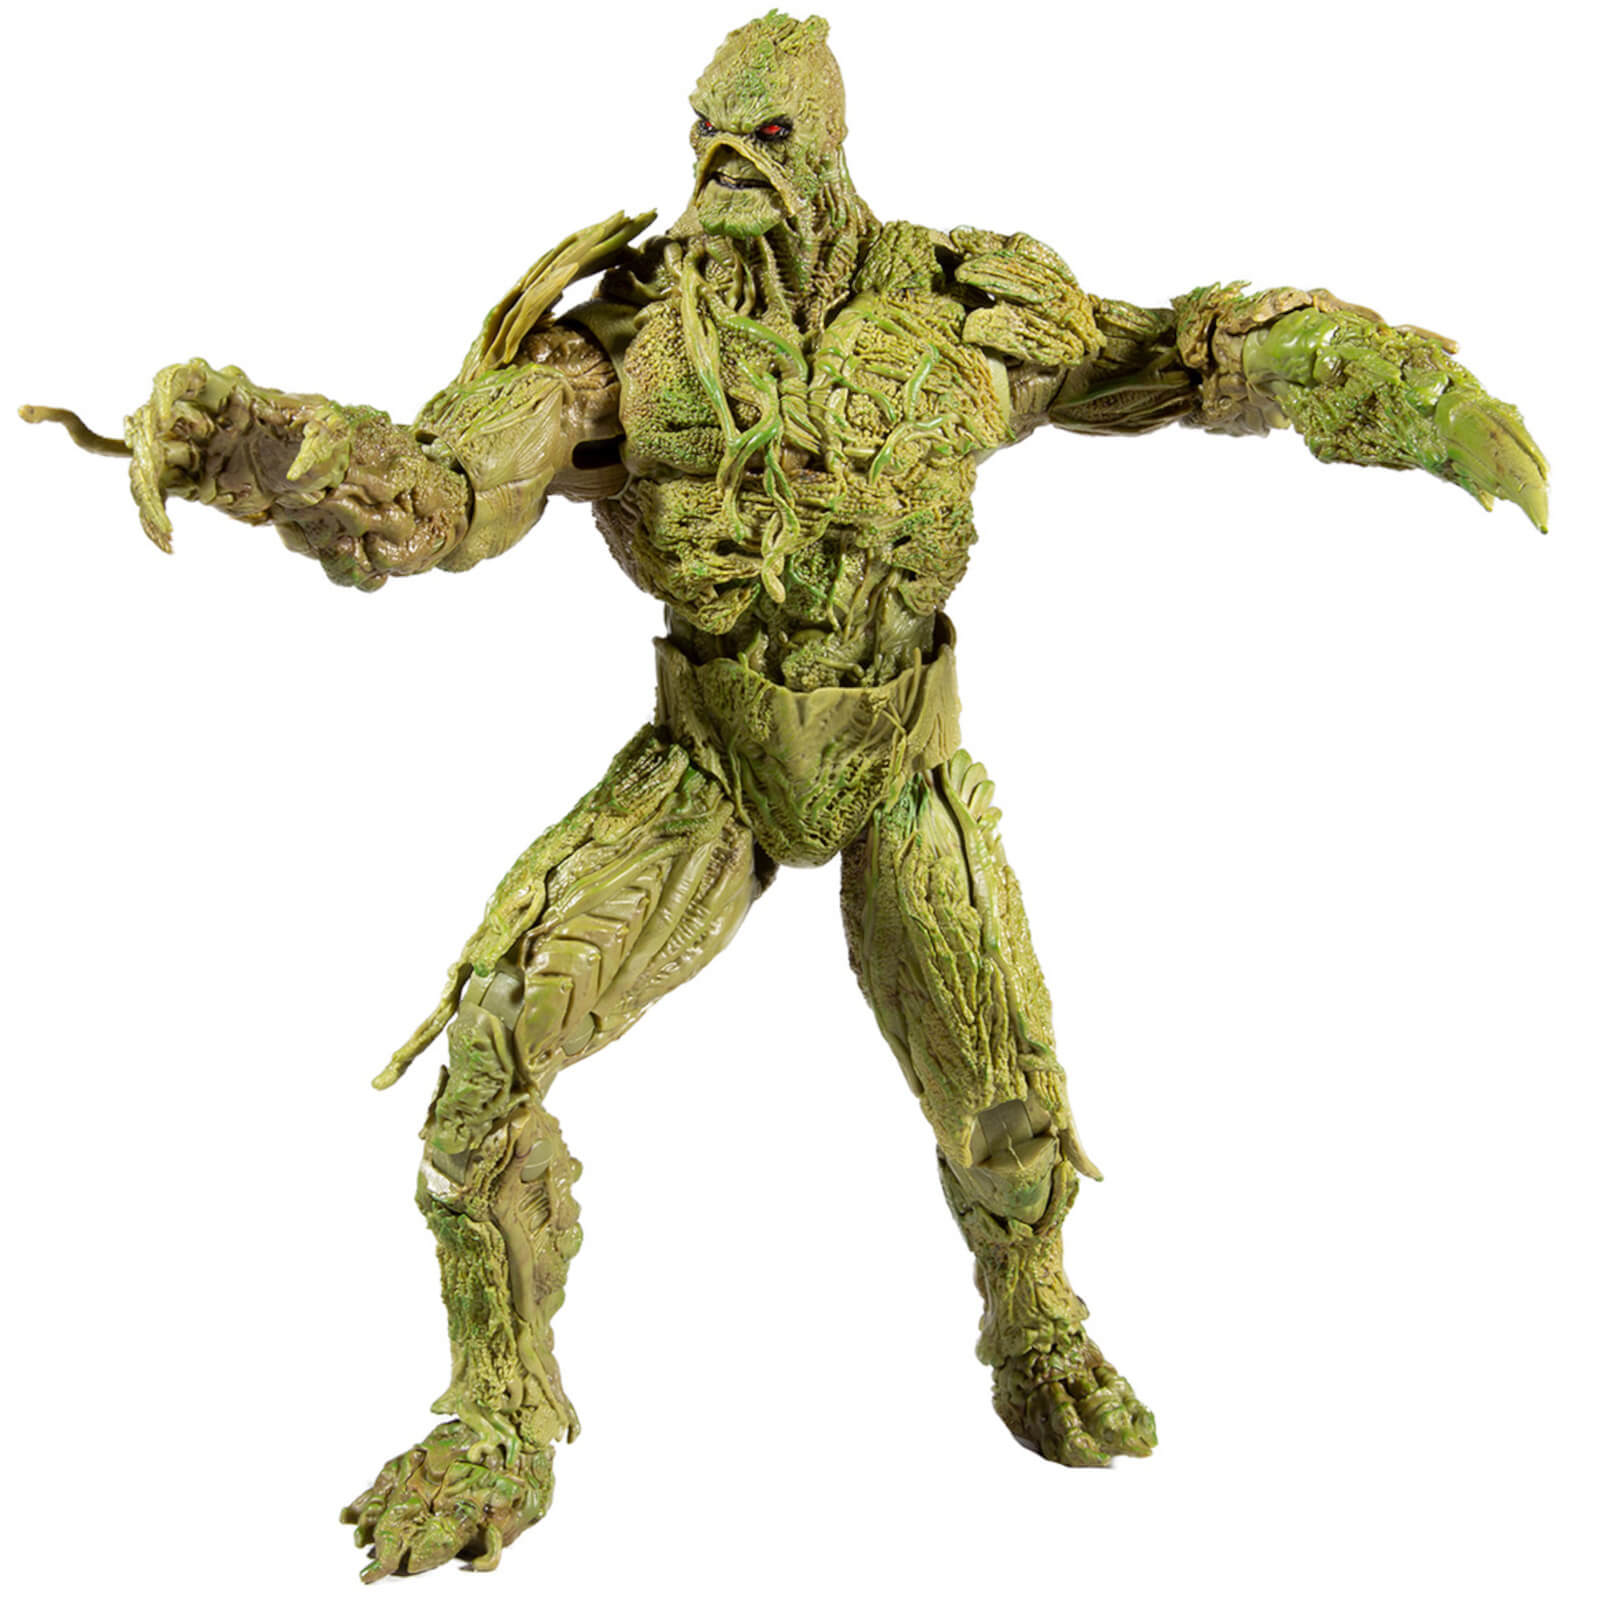 McFarlane DC Multiverse Megafig Action Figure - Swamp Thing